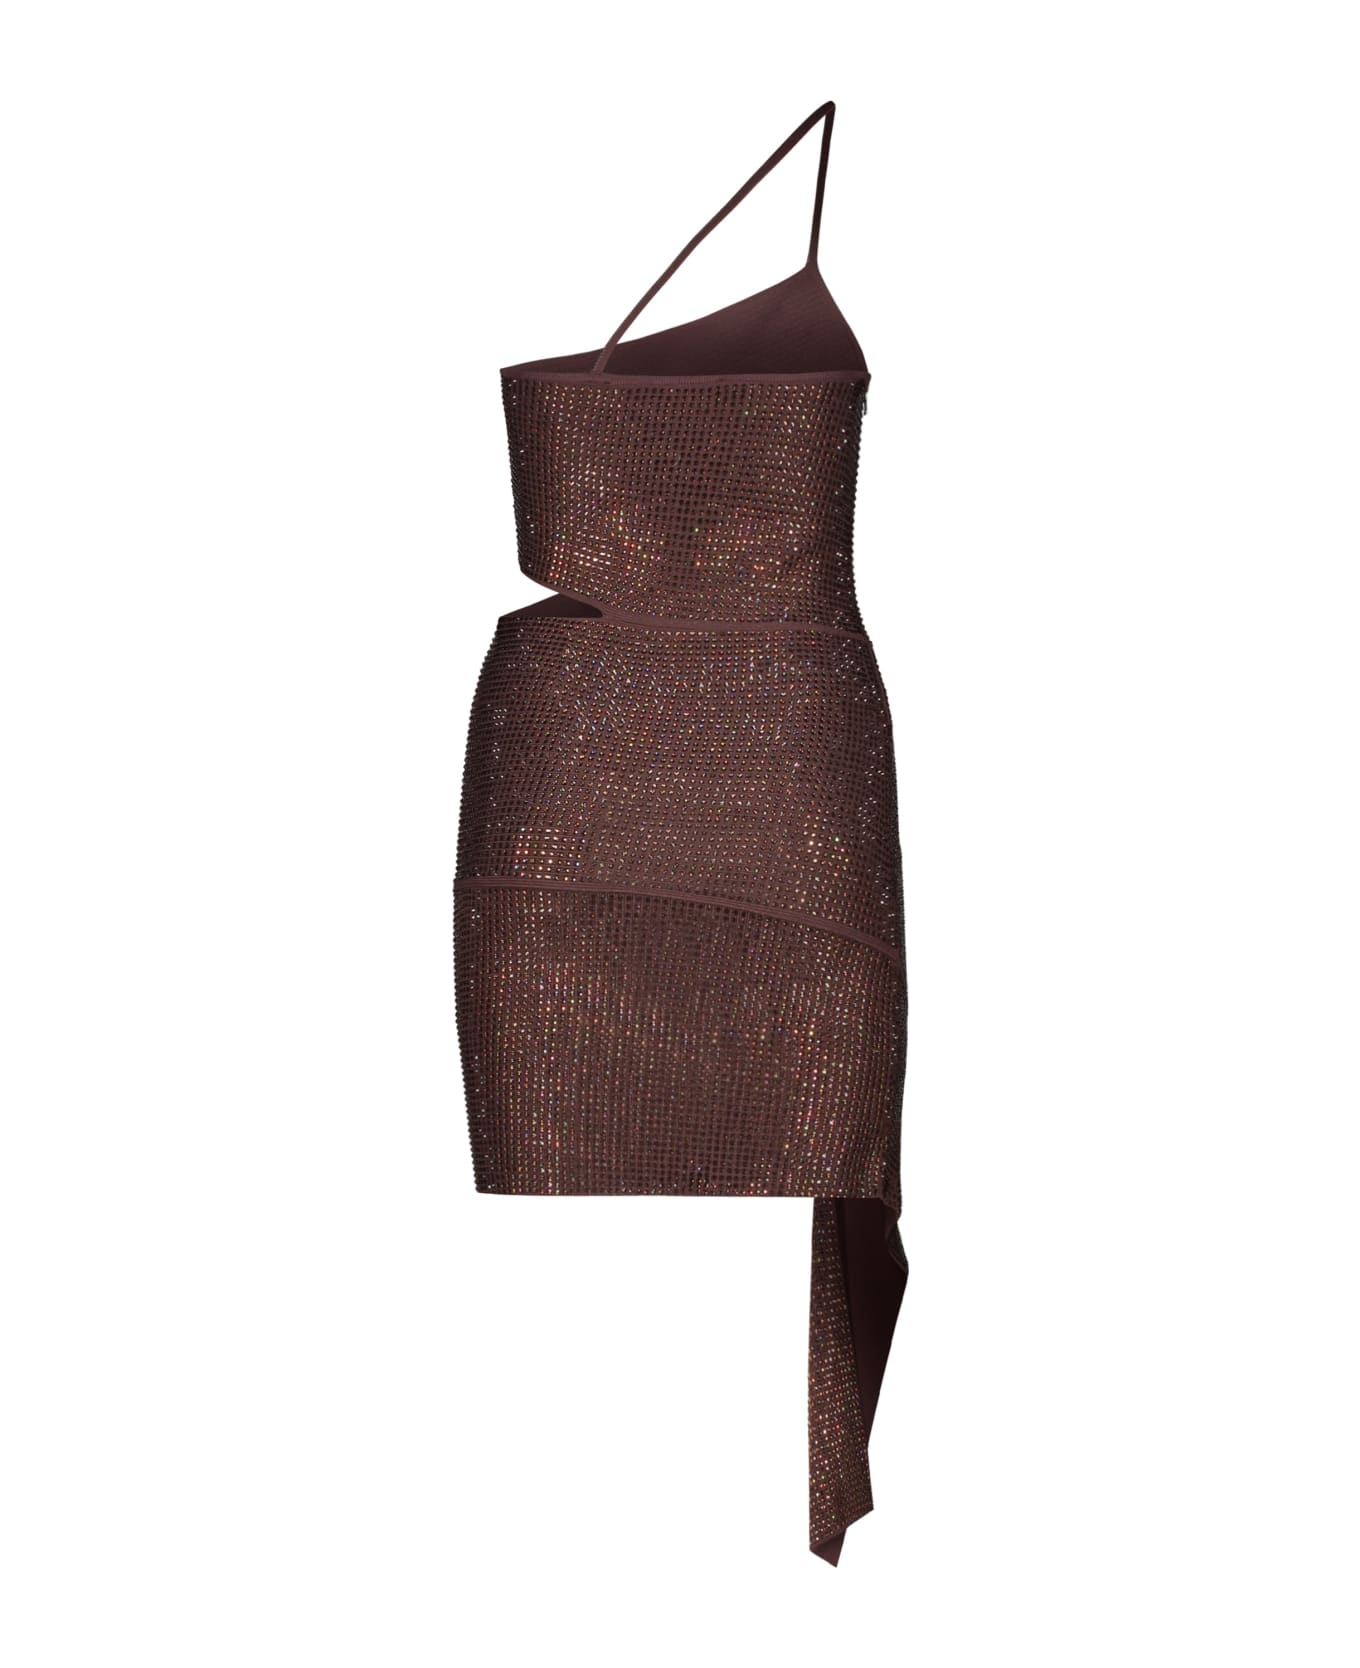 ANDREĀDAMO Embellished Mini Dress - brown